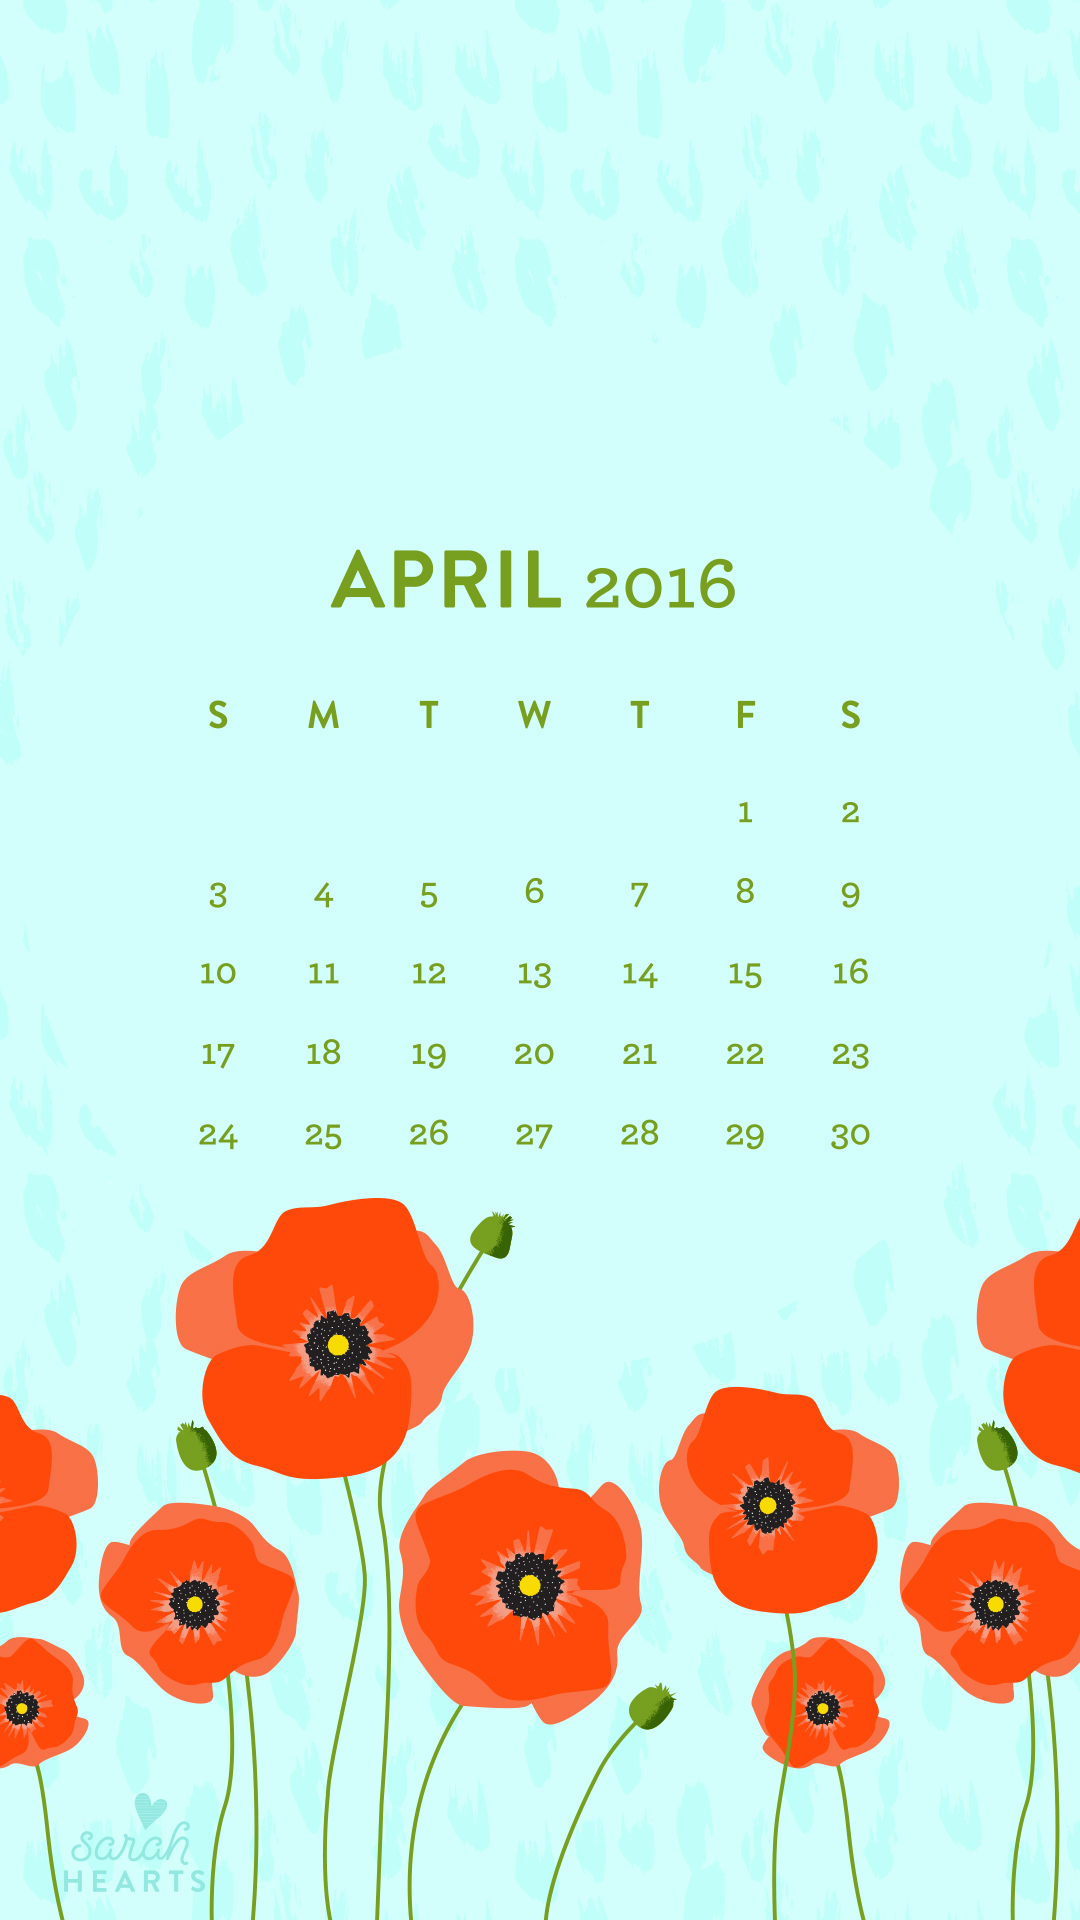 April 2016 Poppy Calendar Wallpaper - Sarah Hearts